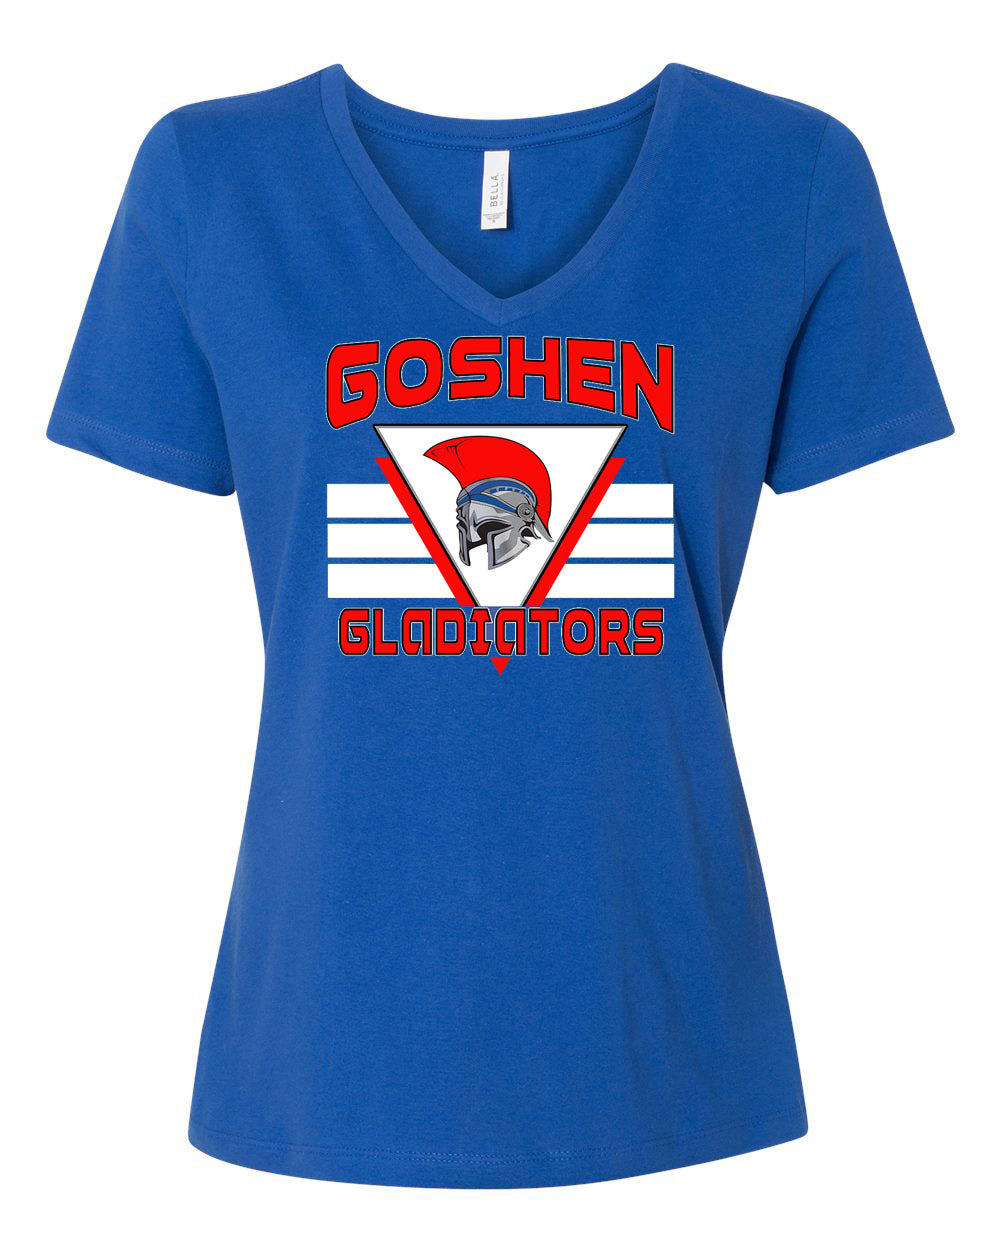 Goshen school Design 2 V-neck T-Shirt